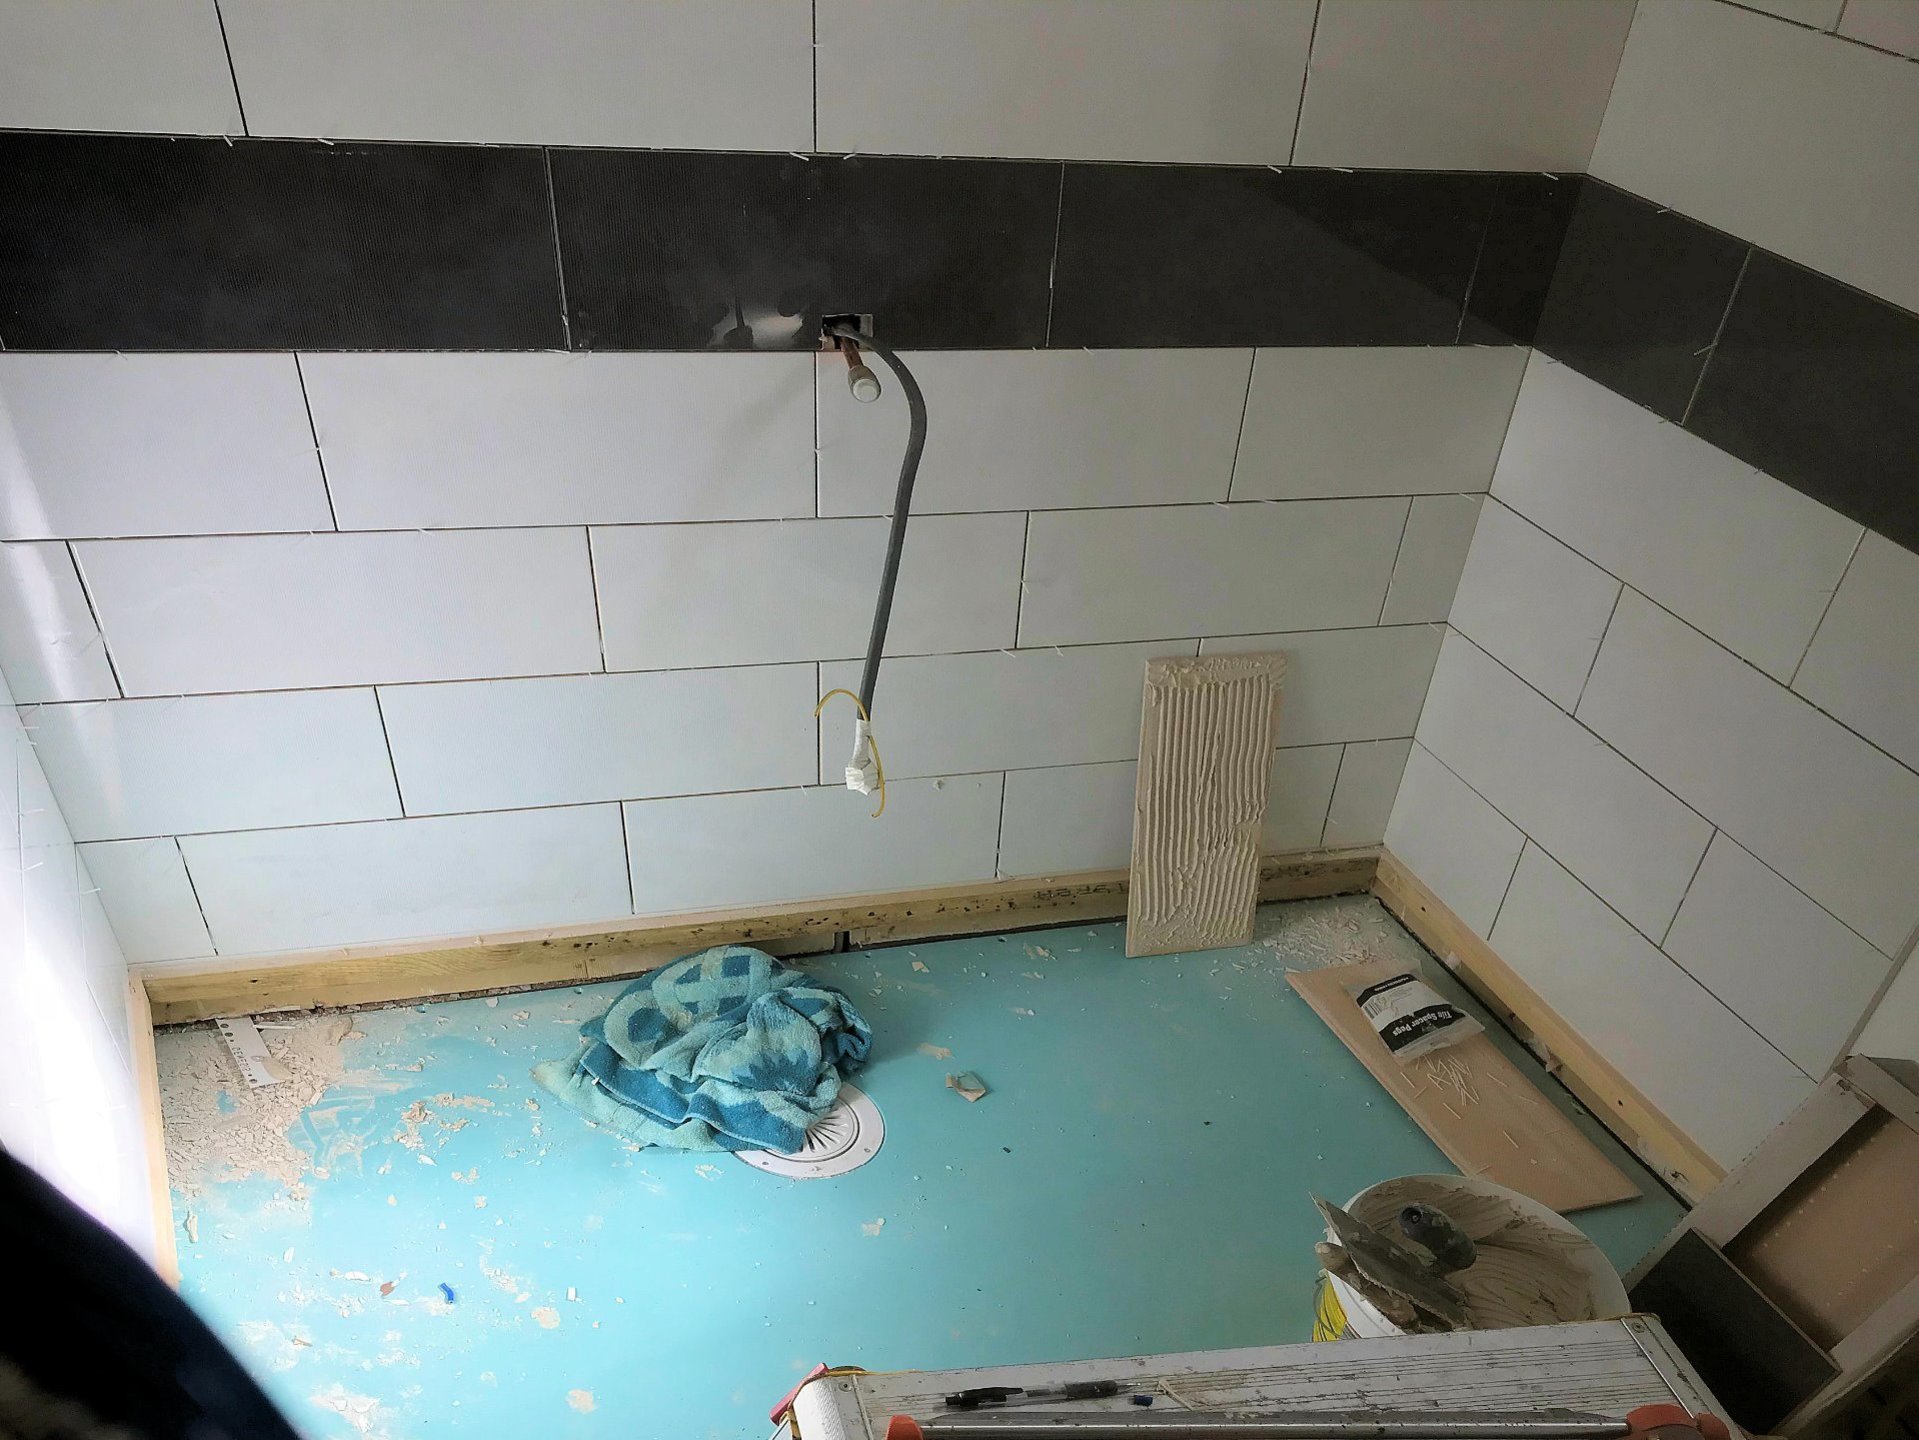 Level access shower room floor installation with central drainage point, Barnstaple North Devon